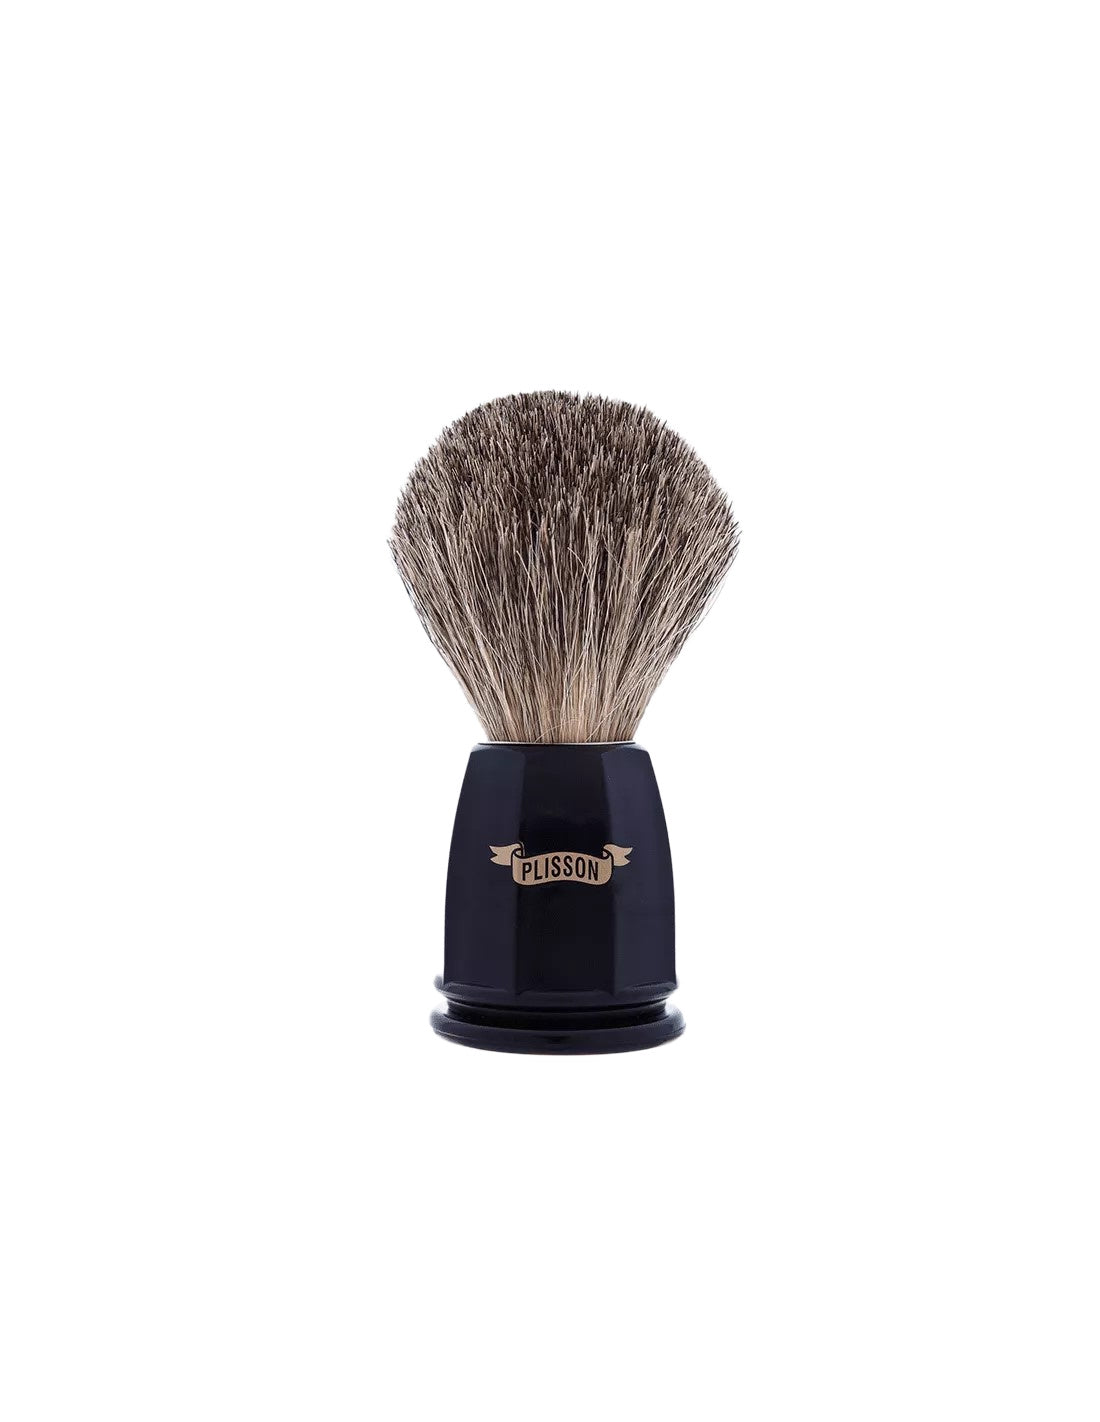 Plisson 1808 Russian Gray Faceted Genuine Badger Shaving Brush - 2 Colors